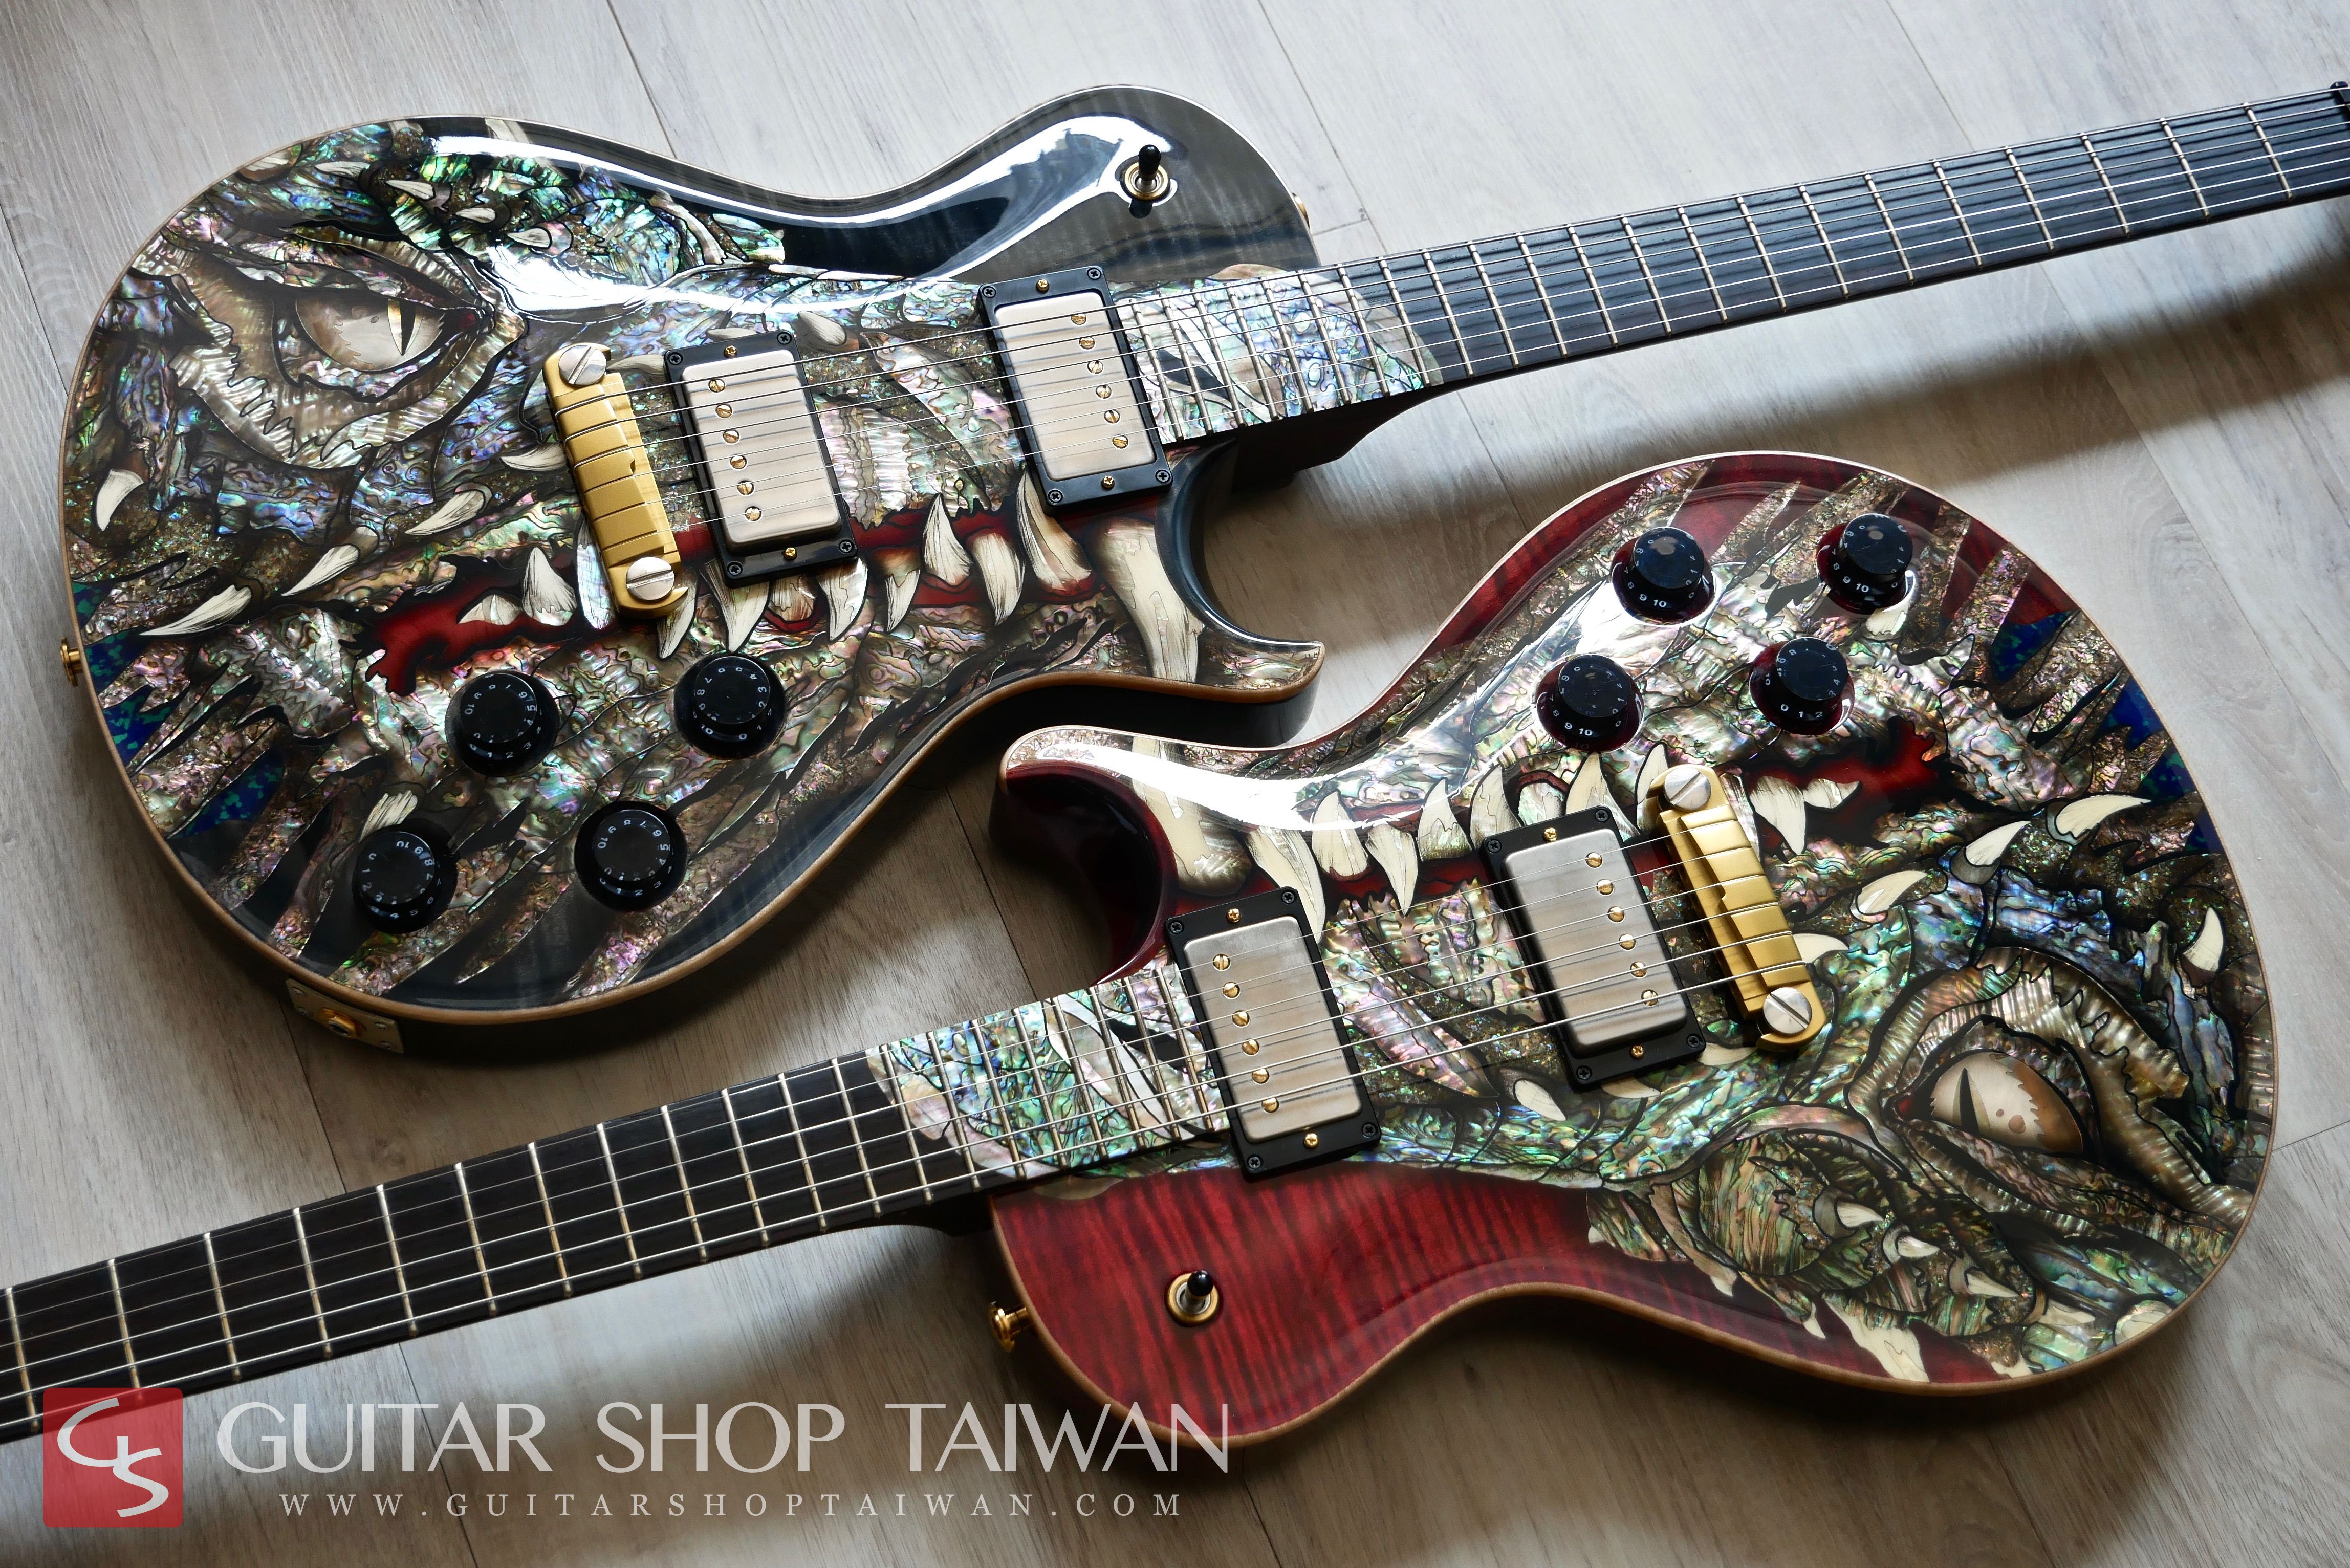 Guitar Shop Taiwan